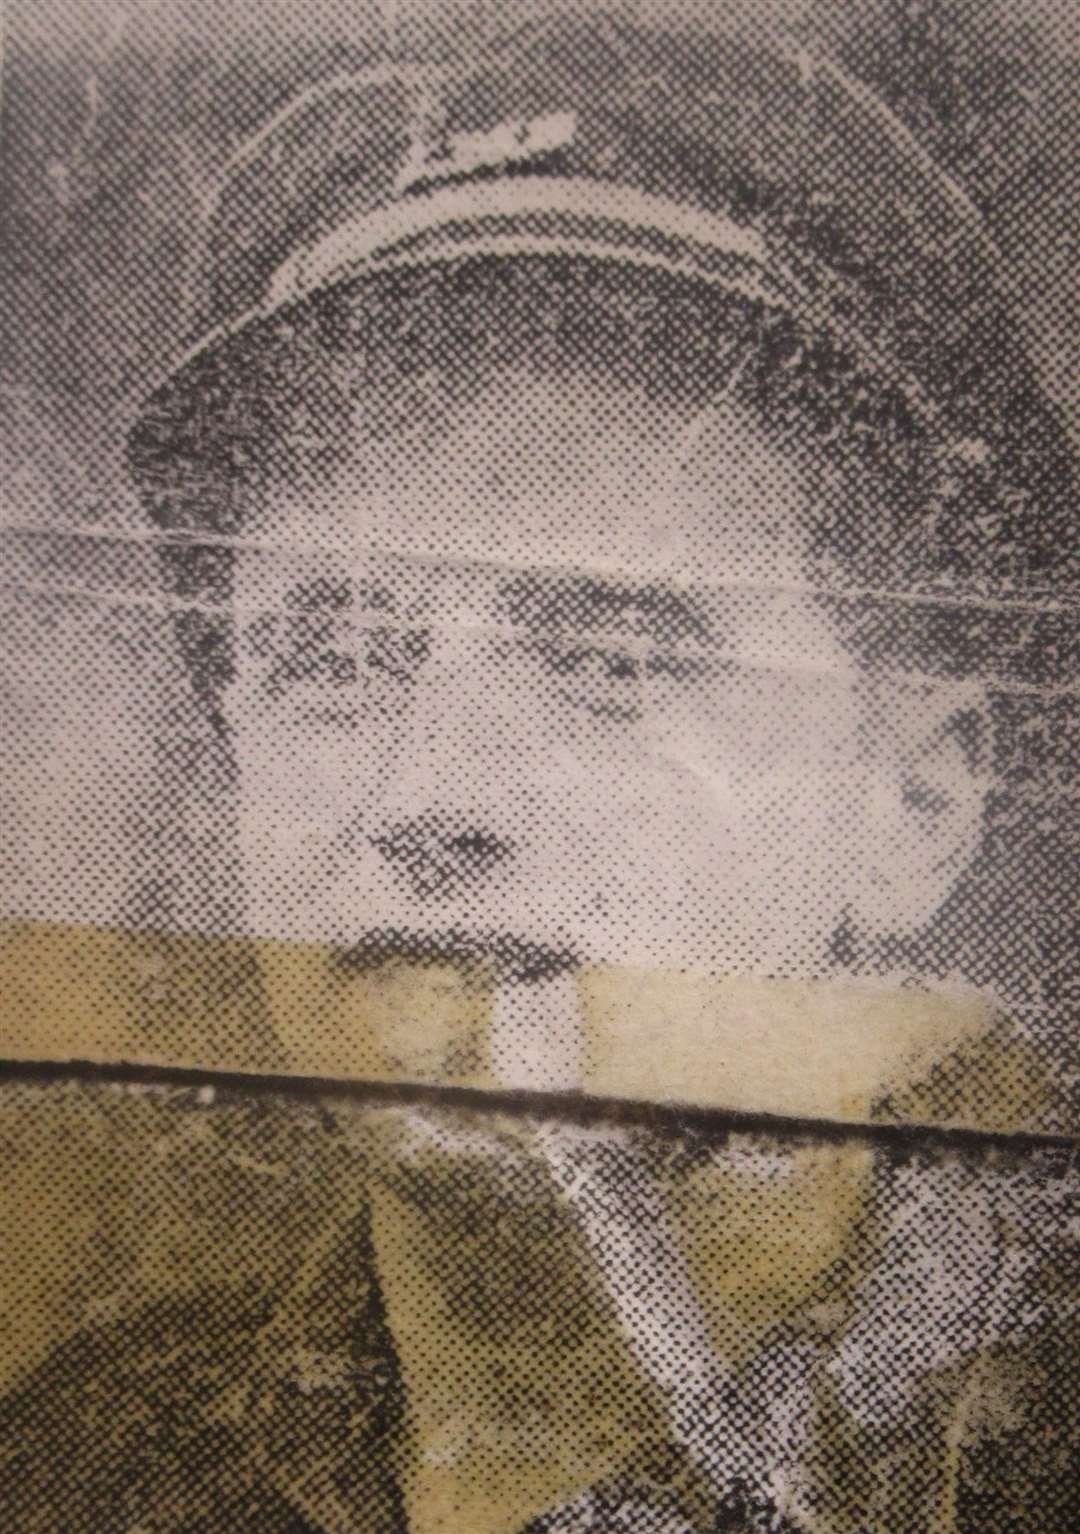 One of the heroes: Aviemore railway porter Donald Maclennan